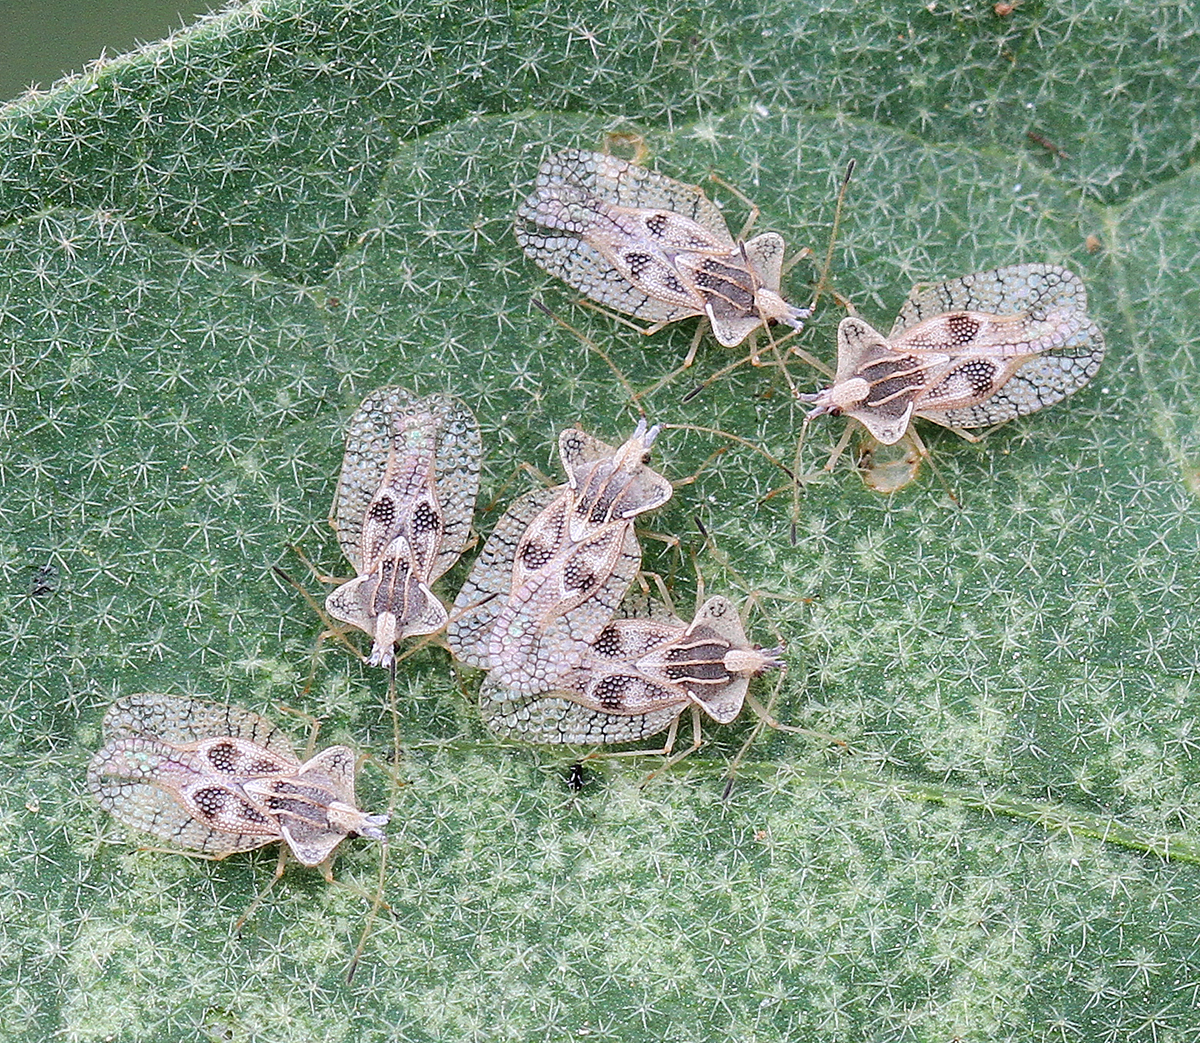 Eggplant lace bug